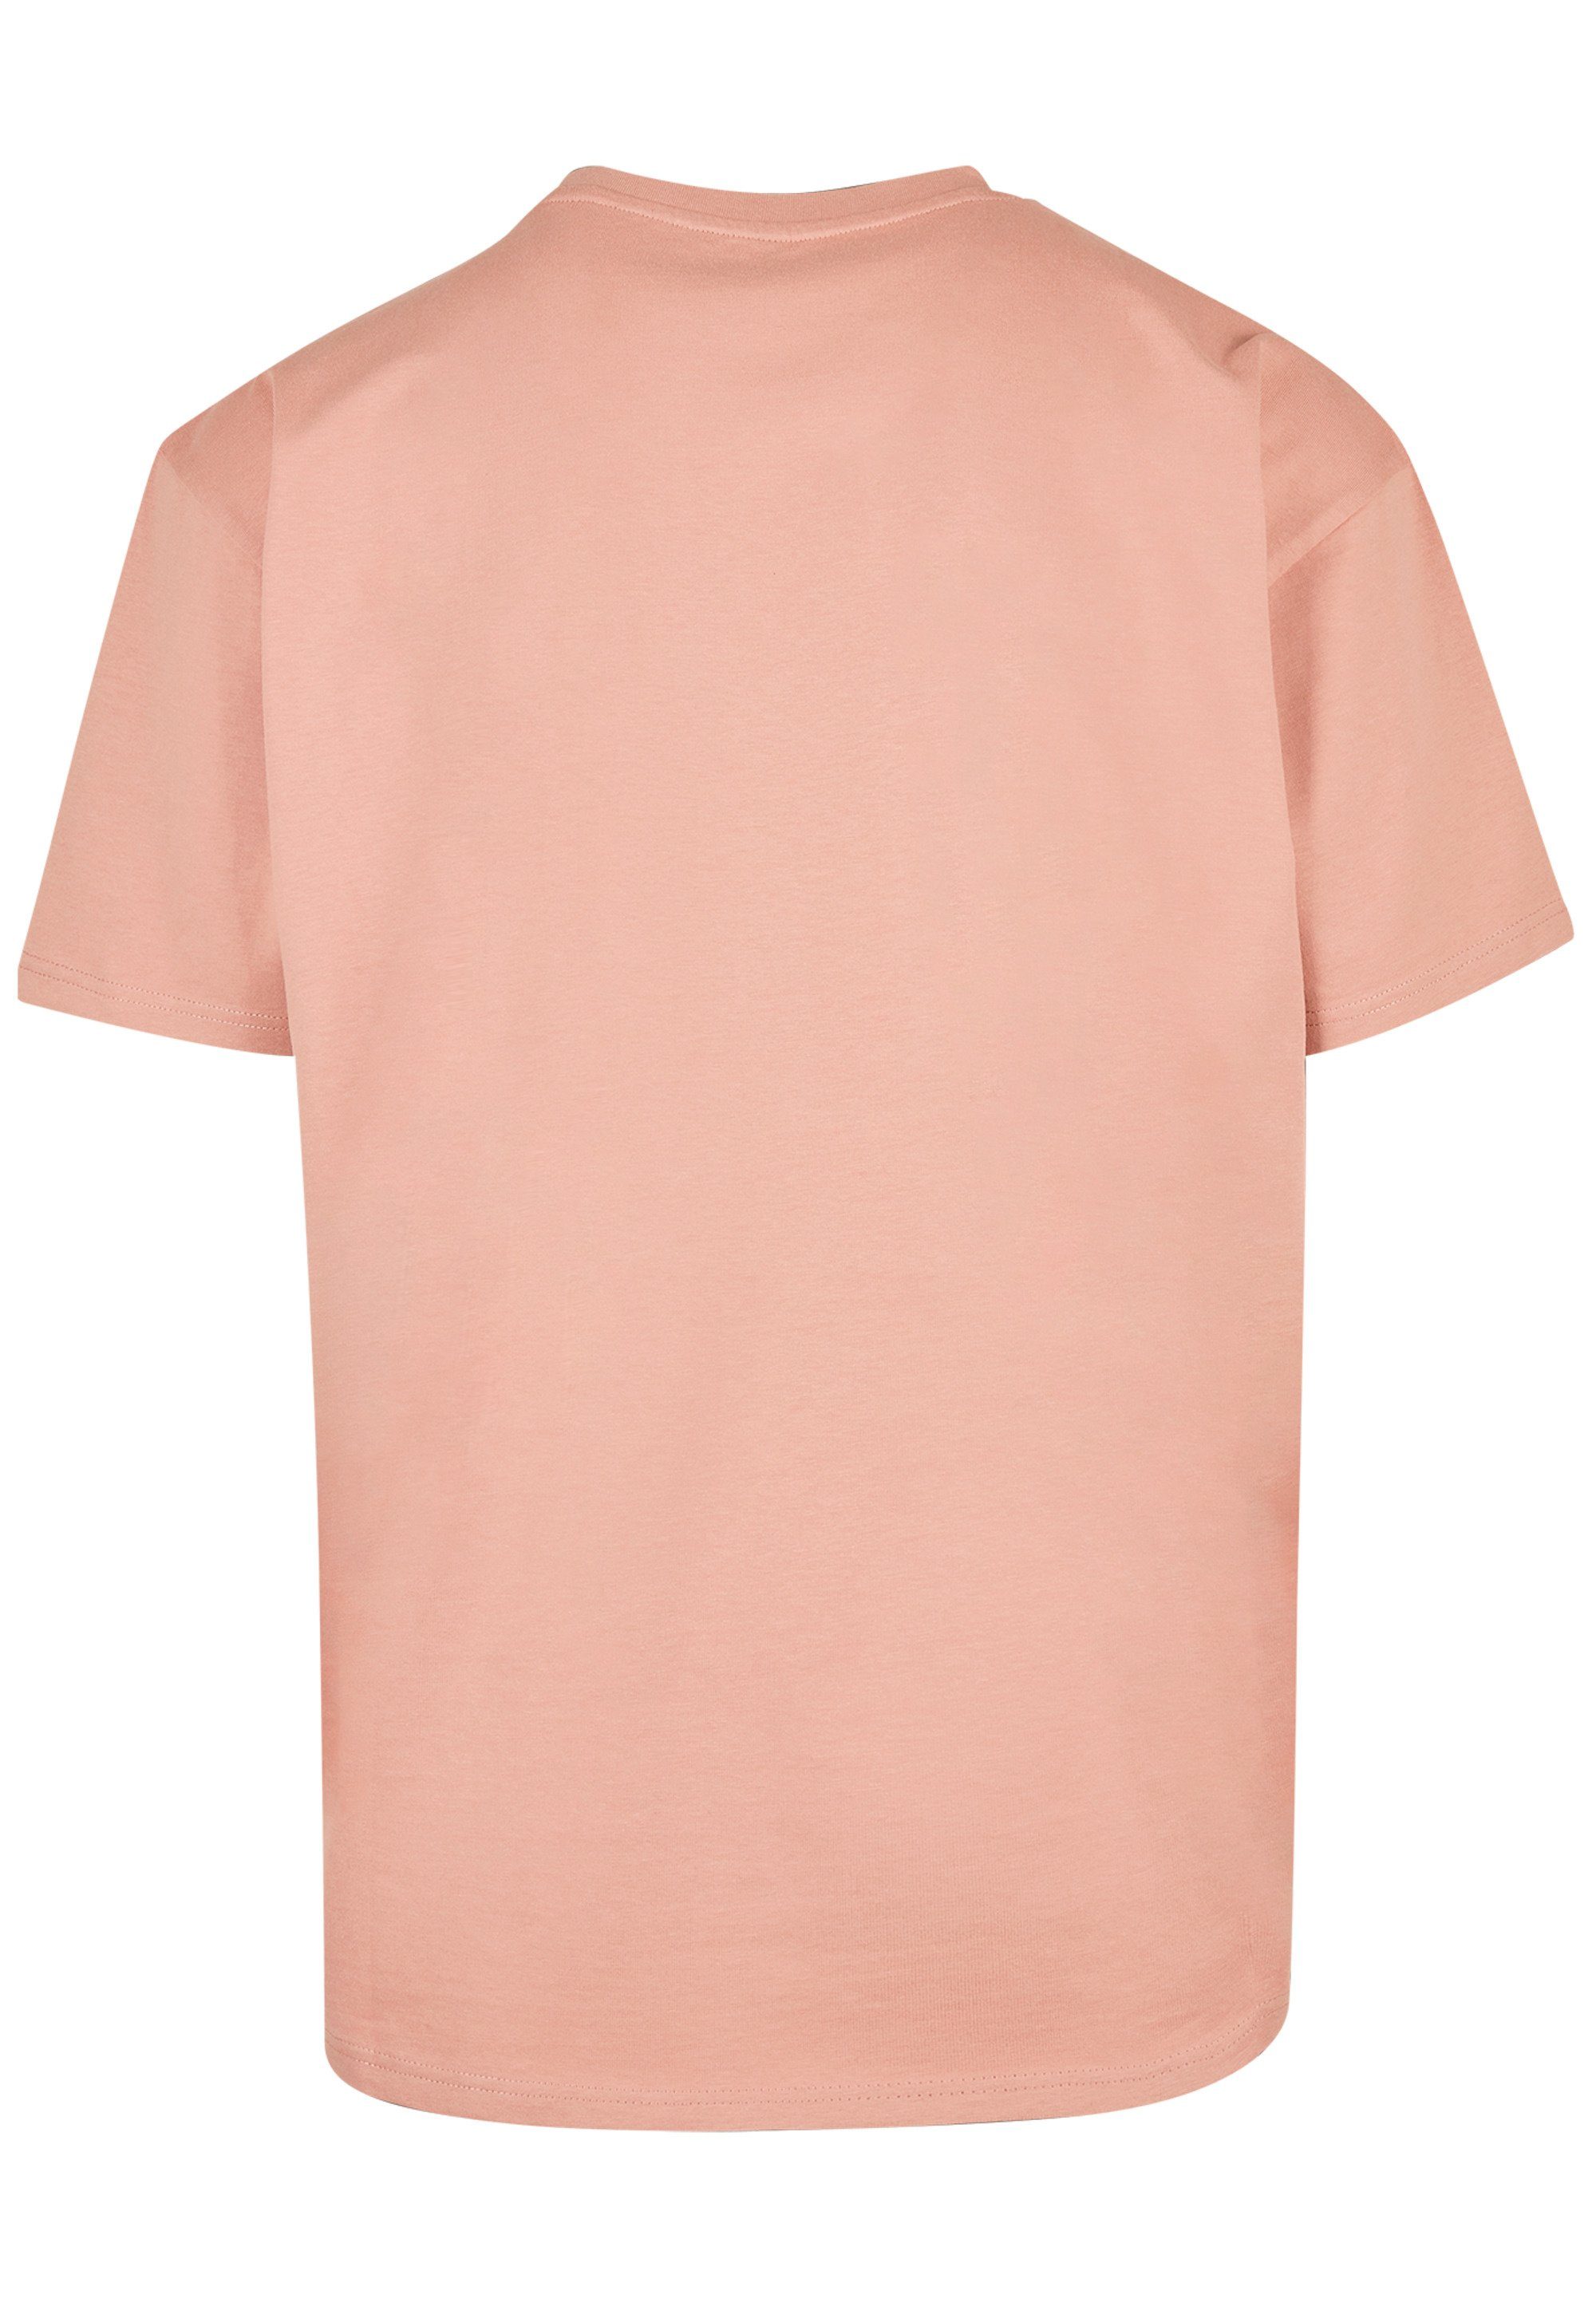 F4NT4STIC T-Shirt Japan amber Drache Print